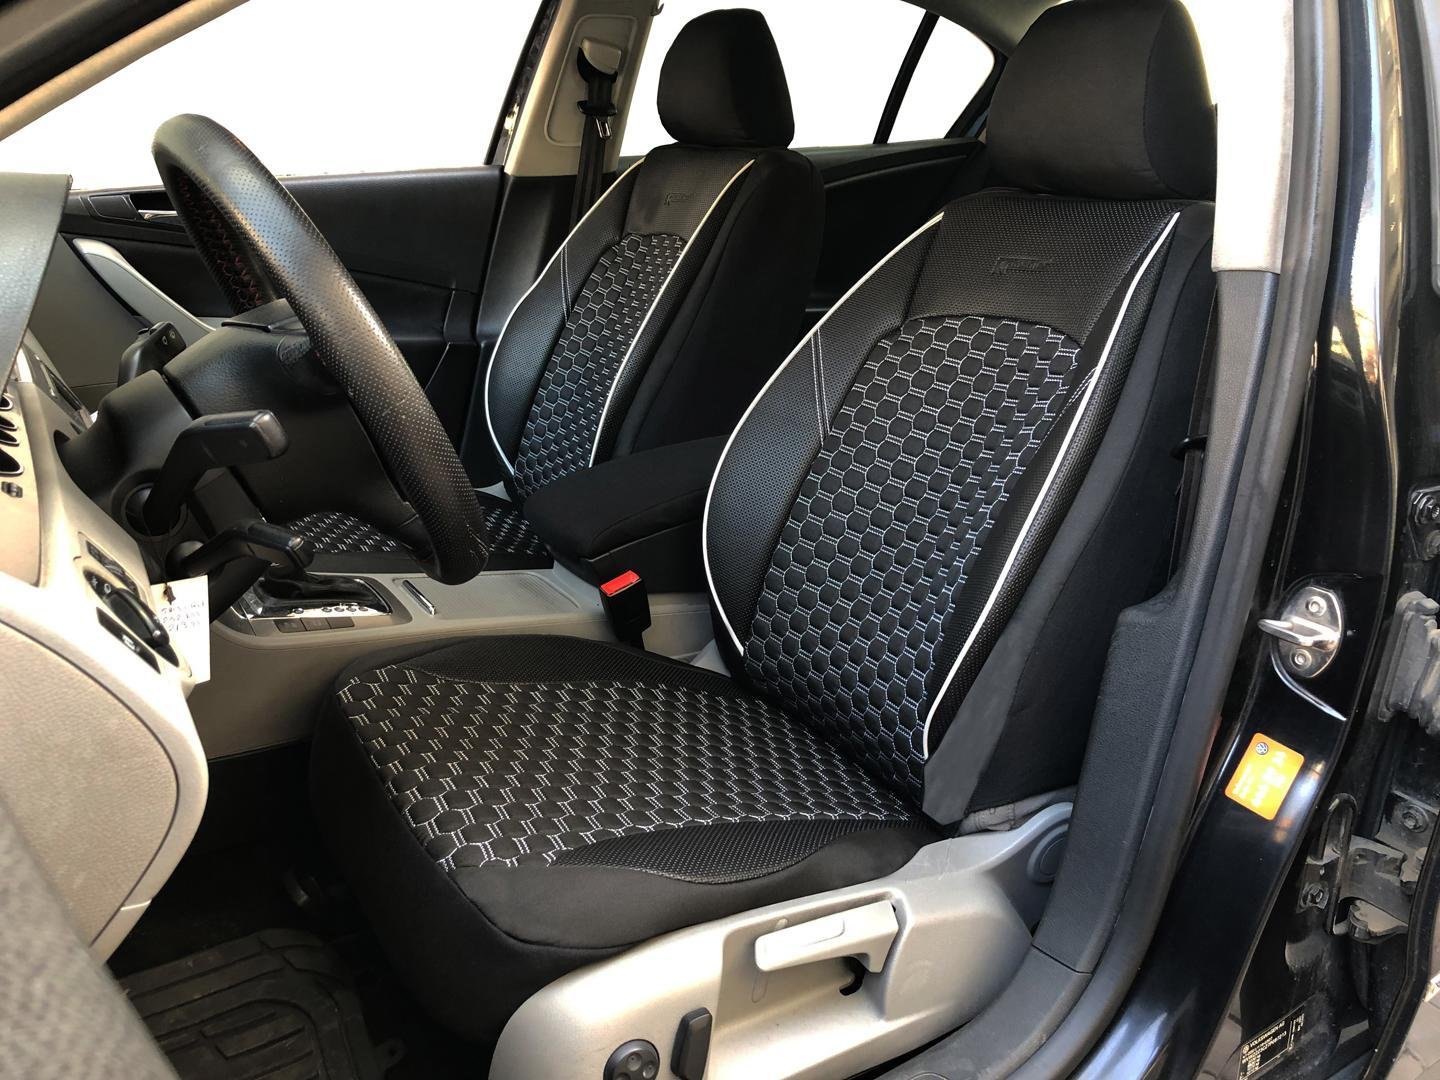 Hochwertige Sitzbezüge für VW Touareg (Schwarz-Grau) - RoyalClass